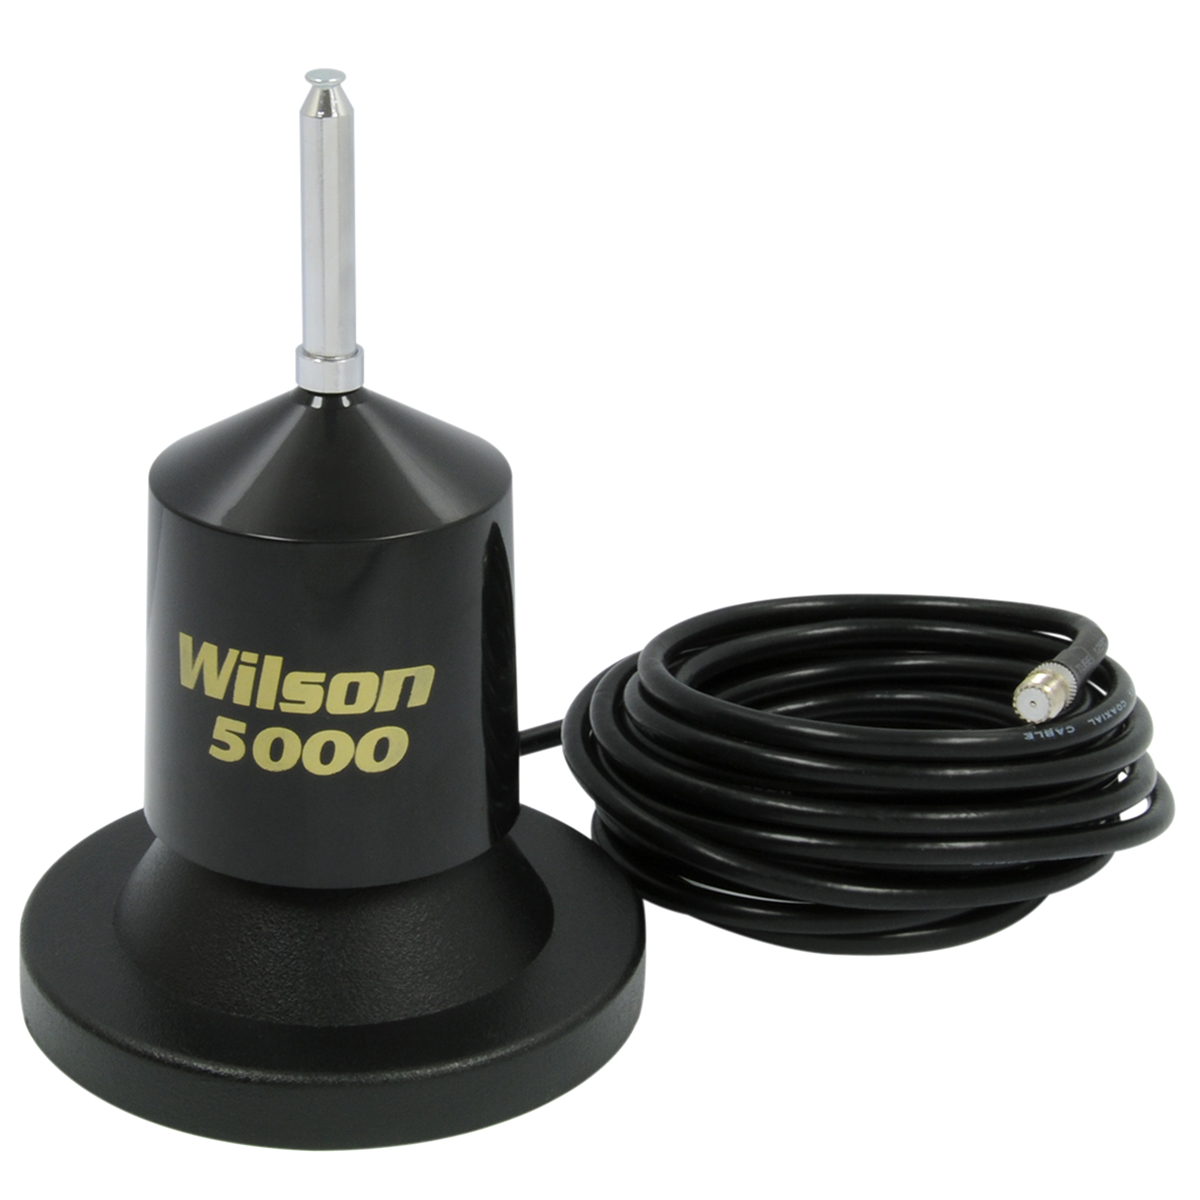 Wilson Antennas W5000 Series Magnet Mount Mobile CB Antenna Kit with 62